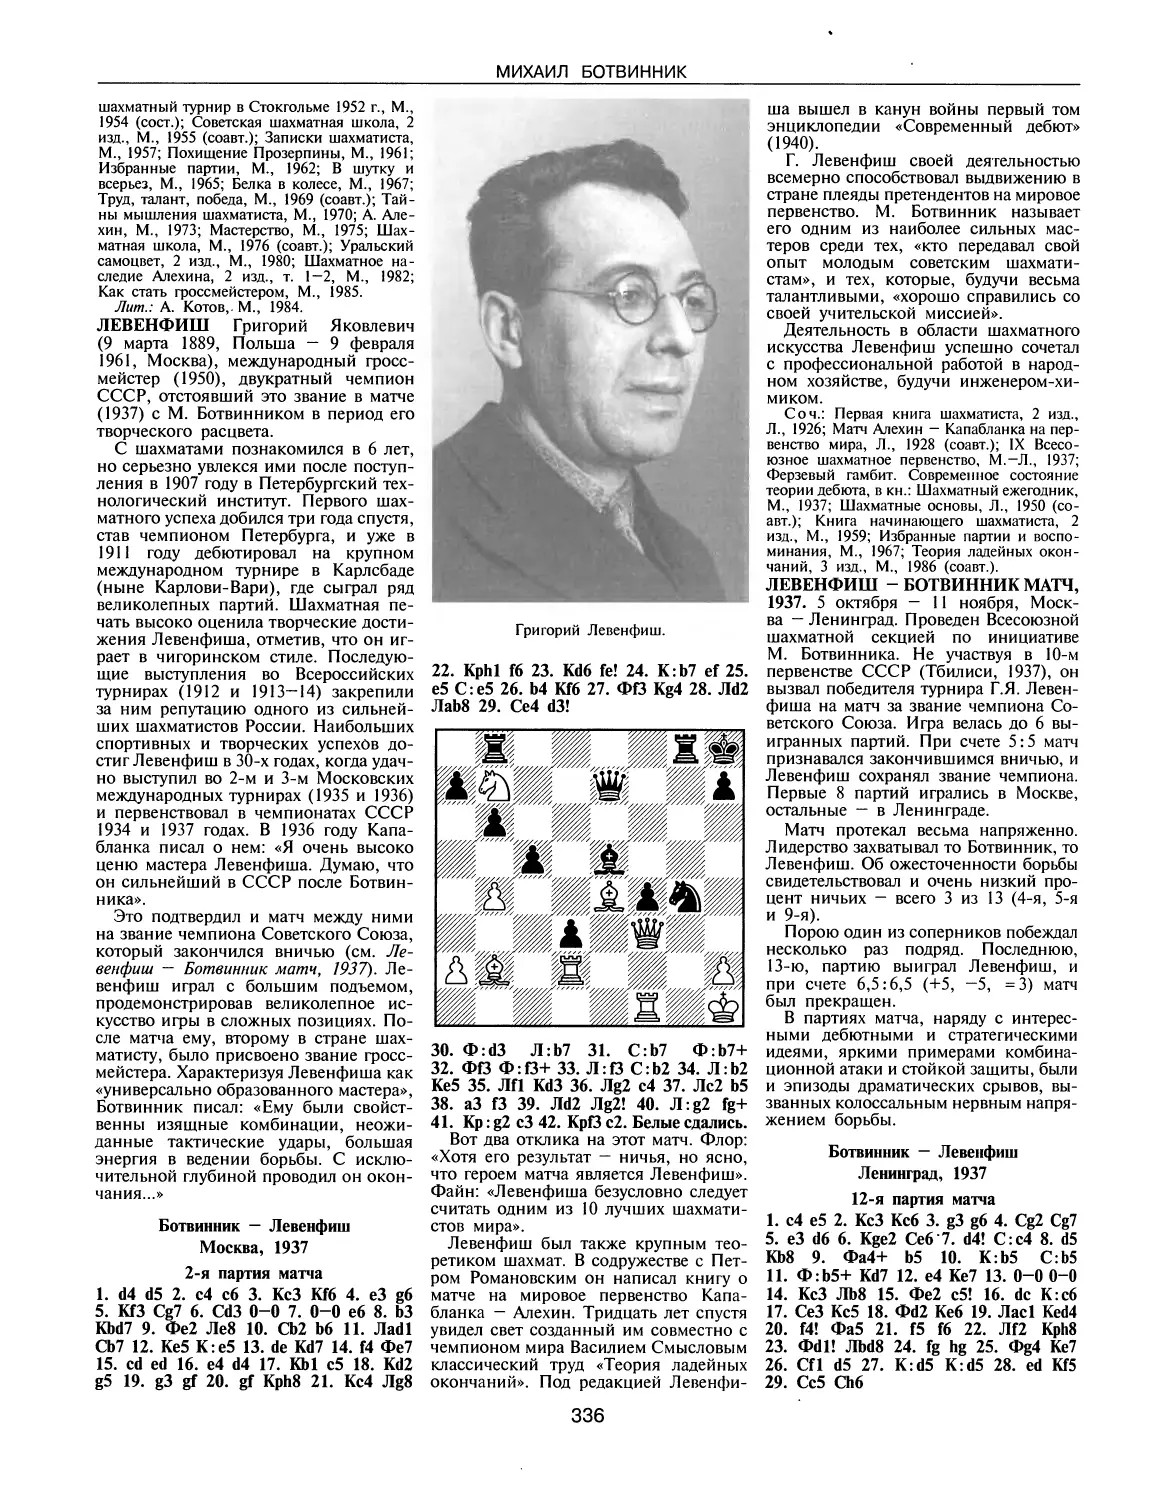 Левенфиш Г.
Левенфиш — Ботвинник матч, 1937